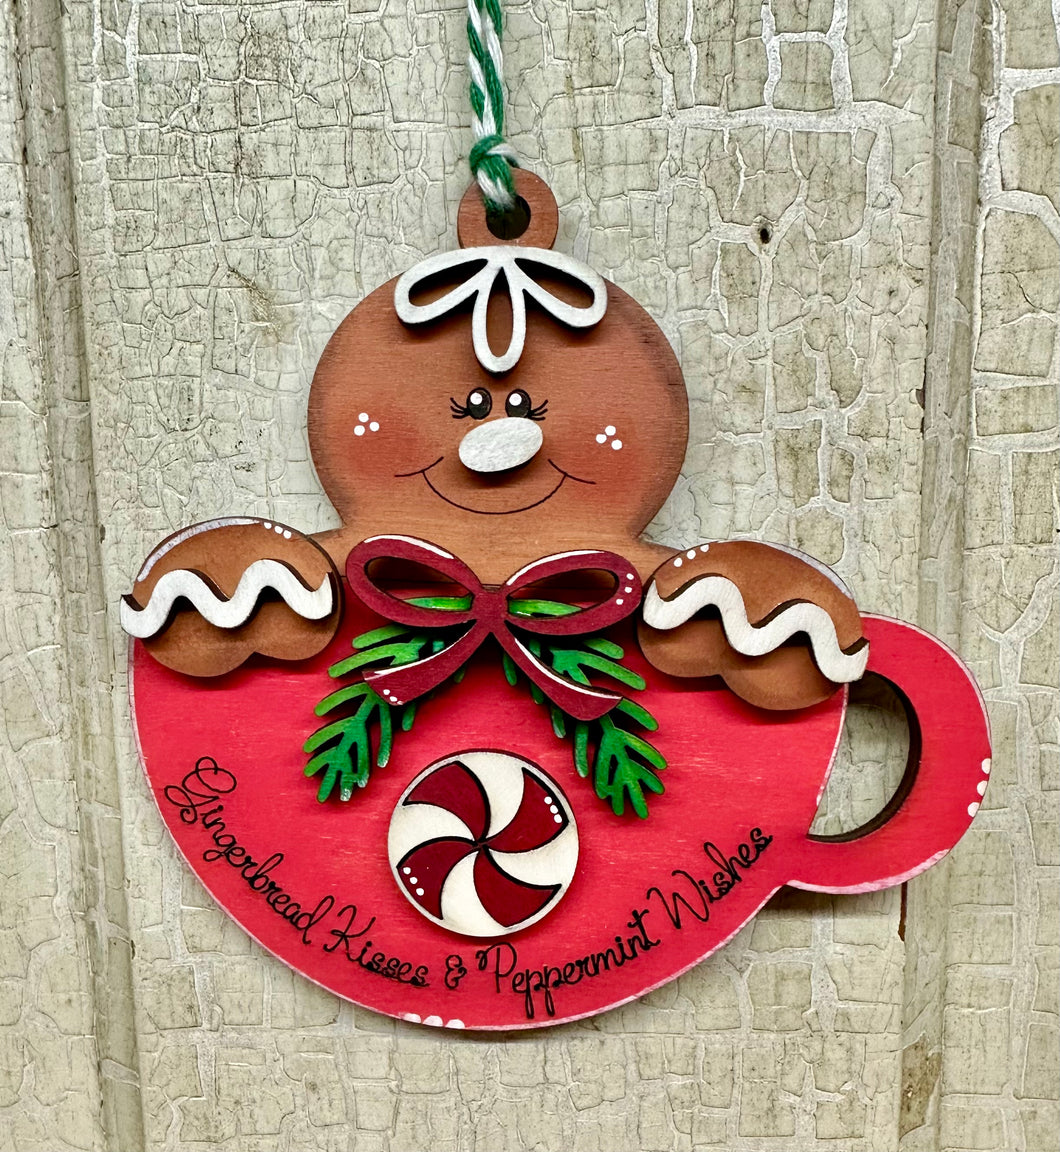 Peppermint Kisses Gingerbread Man Ornament - Unpainted